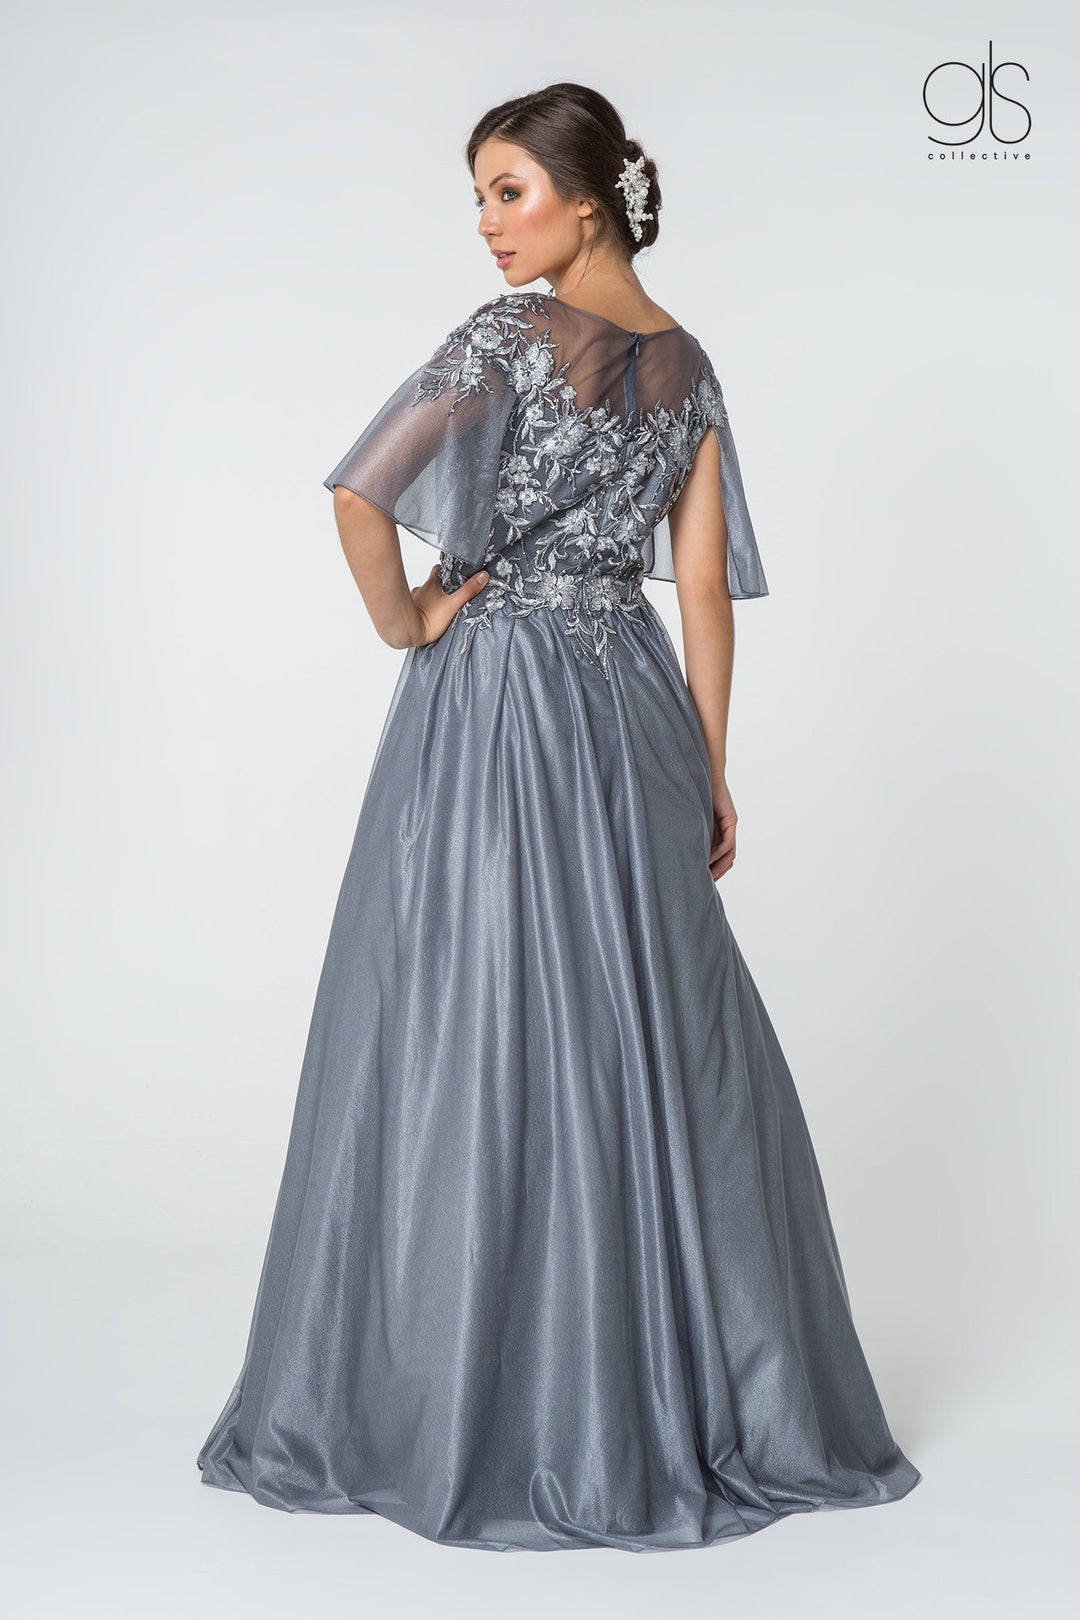 Long Floral Applique Dress with Flutter Sleeves by Elizabeth K GL2830-Long Formal Dresses-ABC Fashion